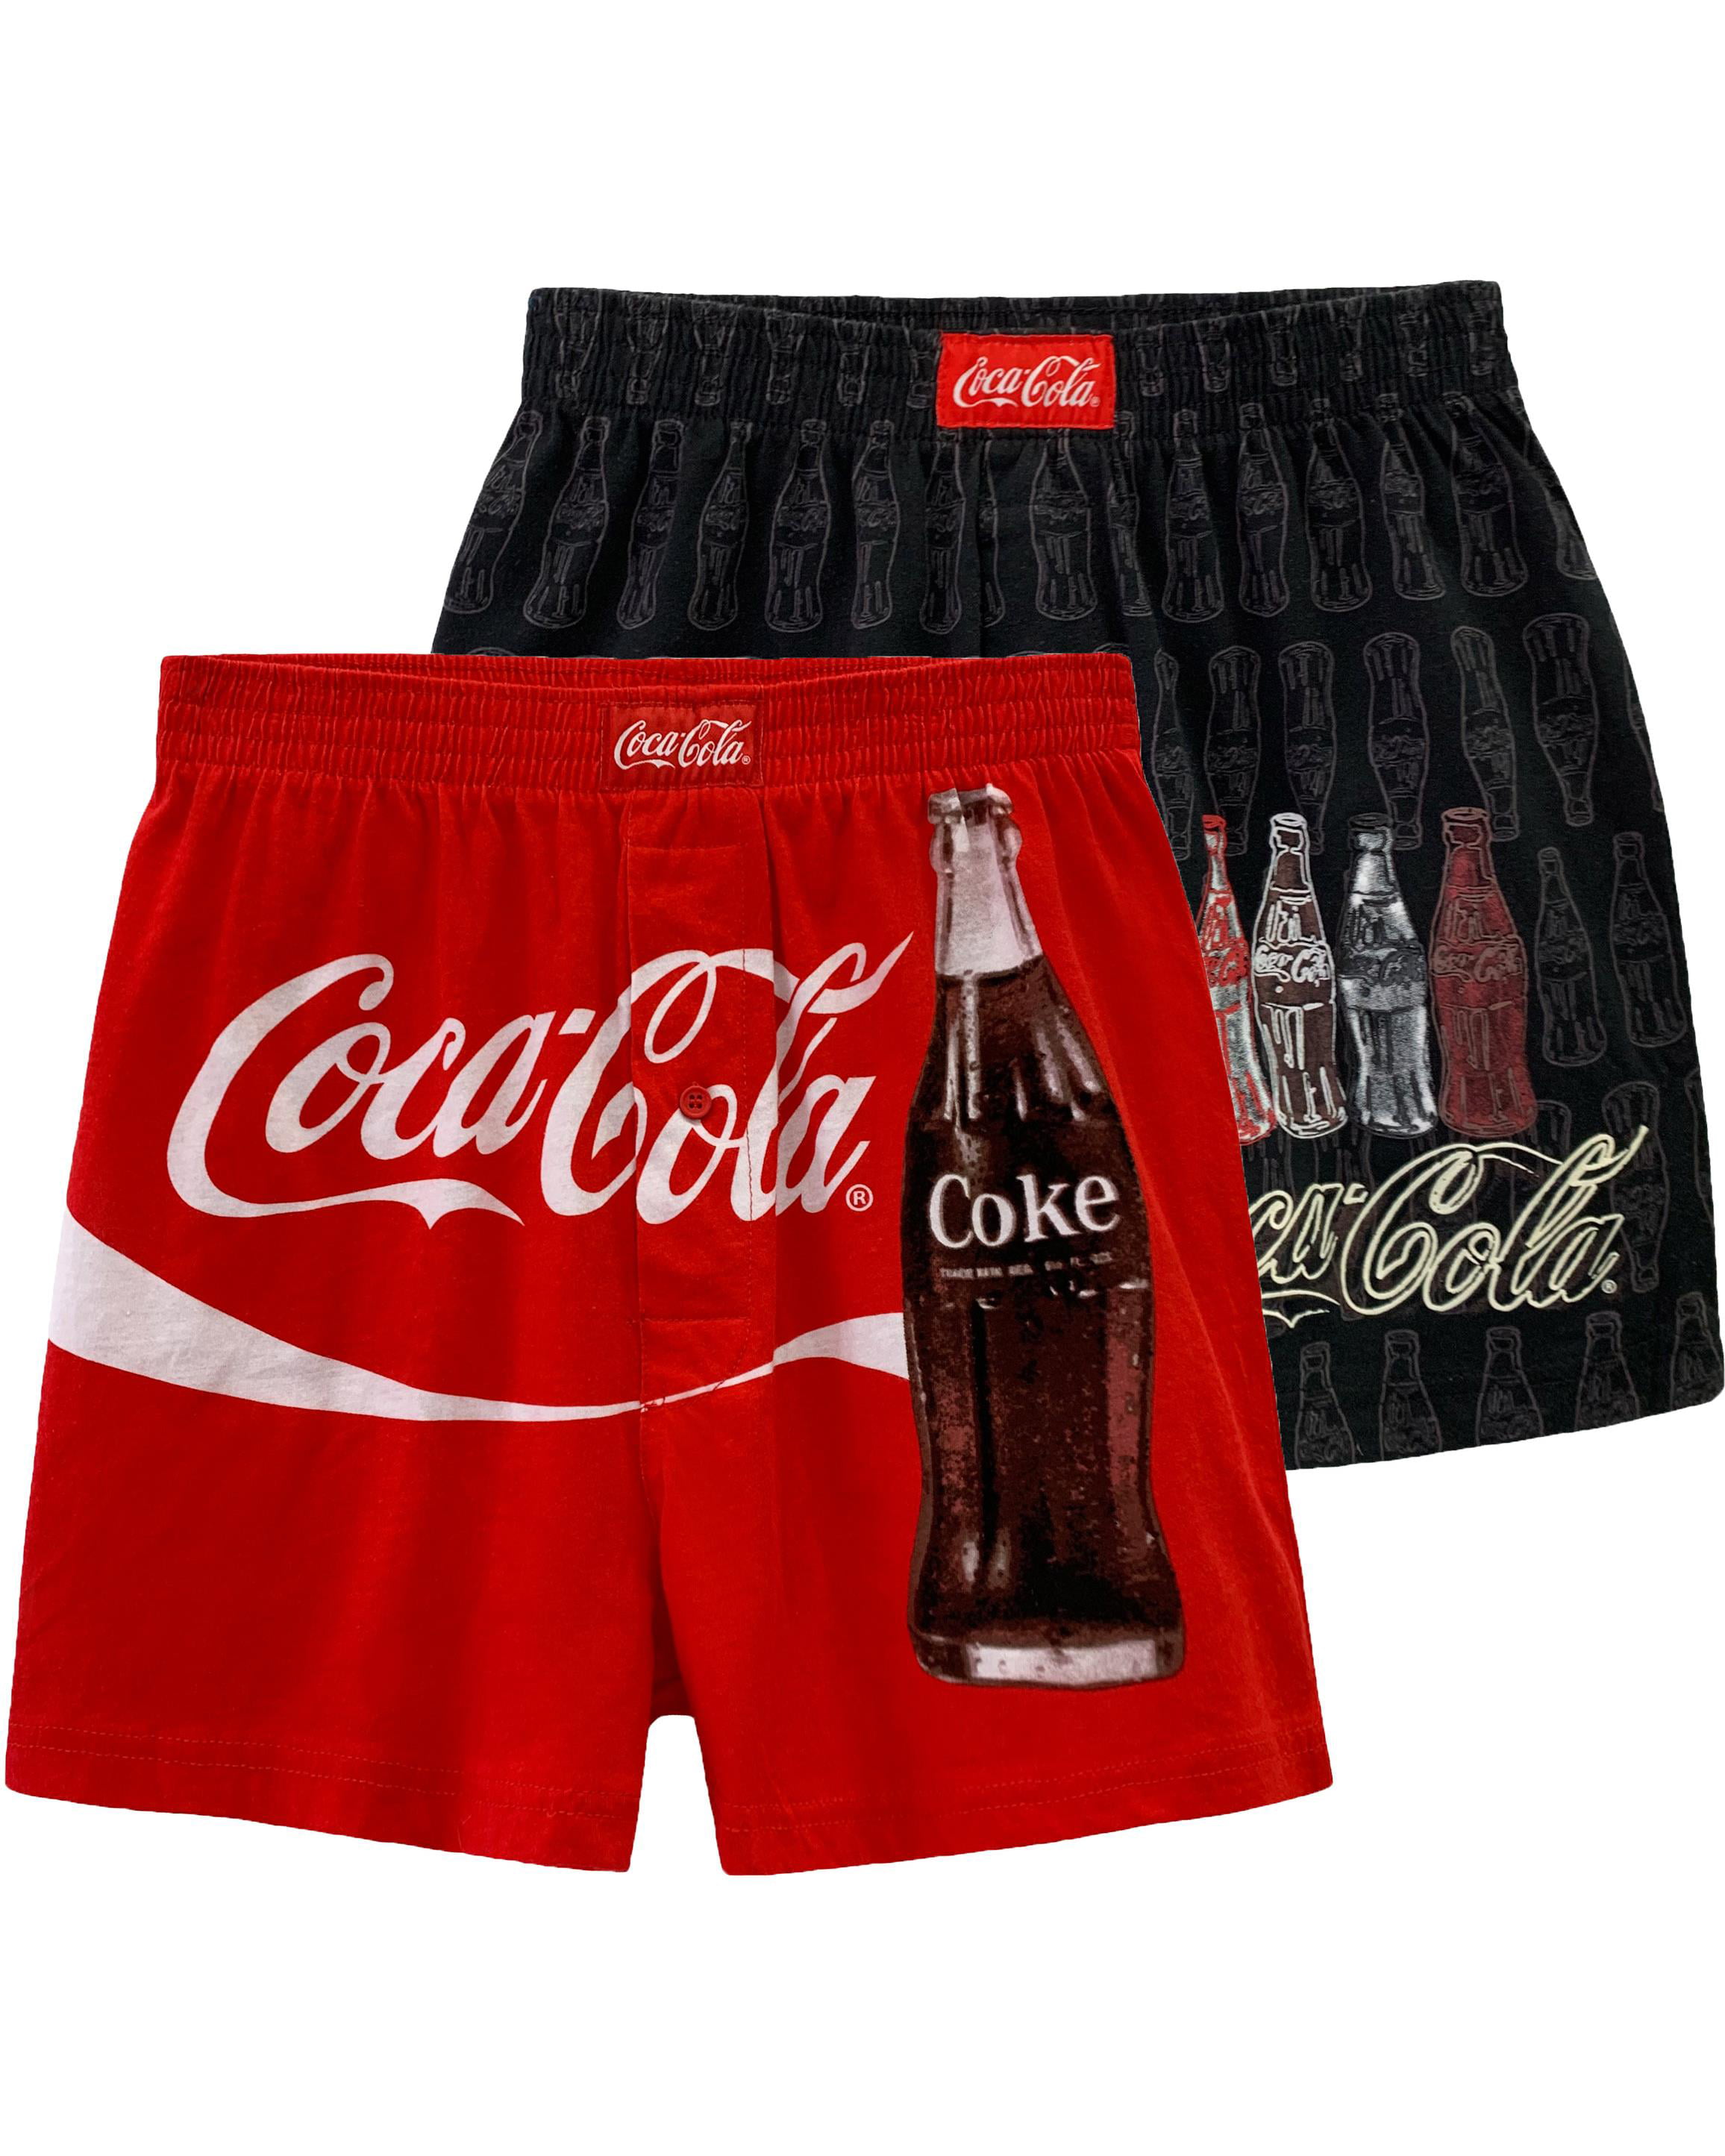 Lounge Boxer Pants Drink Coca Cola Cotton Men's Size M-XL Coke Sleep Shorts 